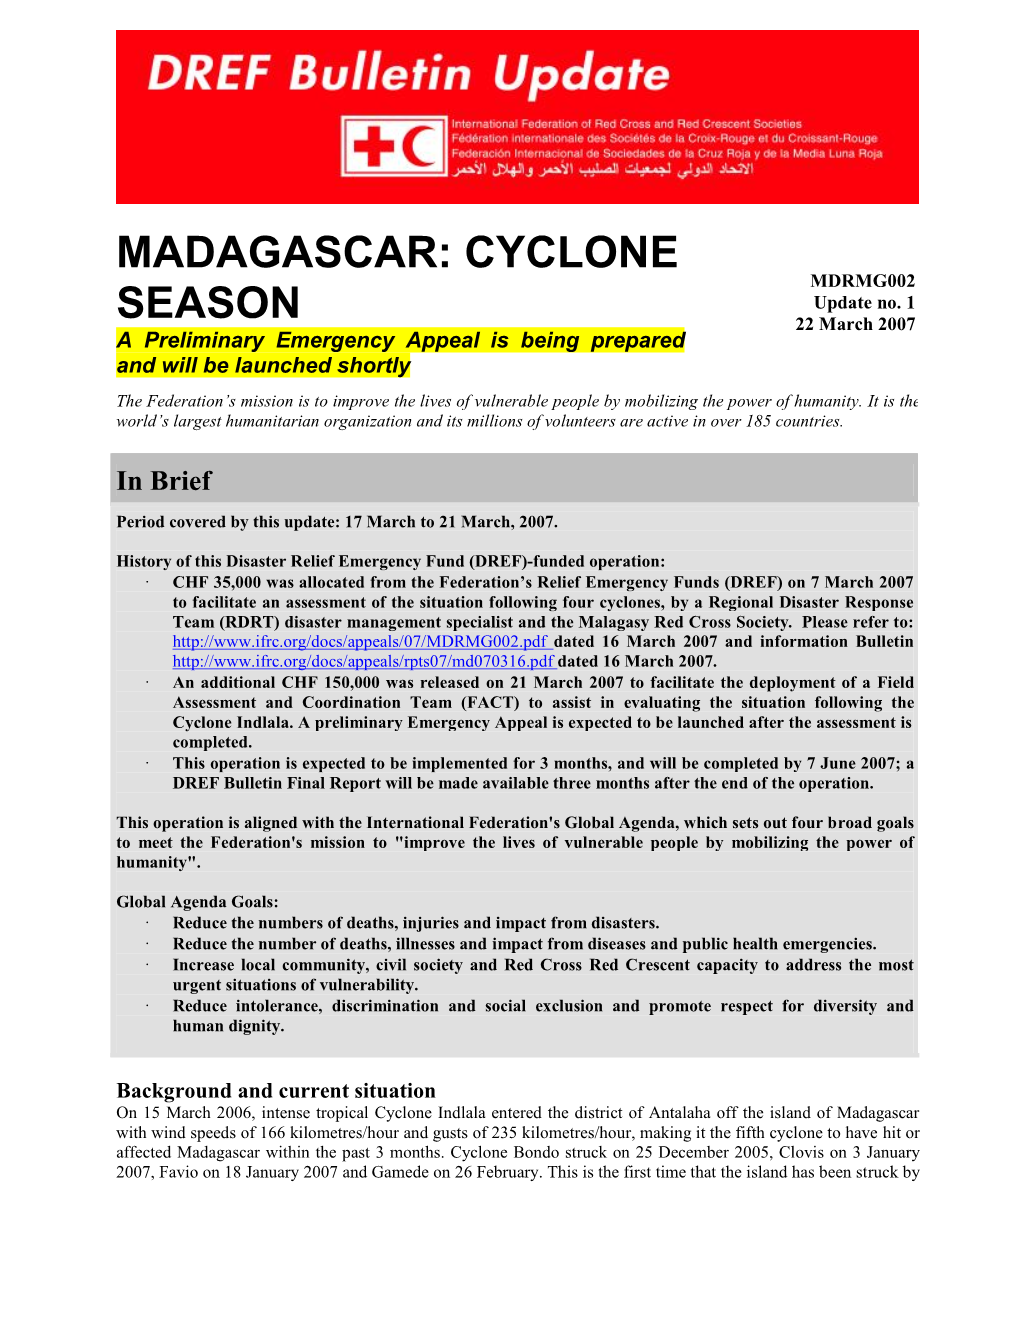 Cyclone Preparedness; MDRMD002; DREF Update No